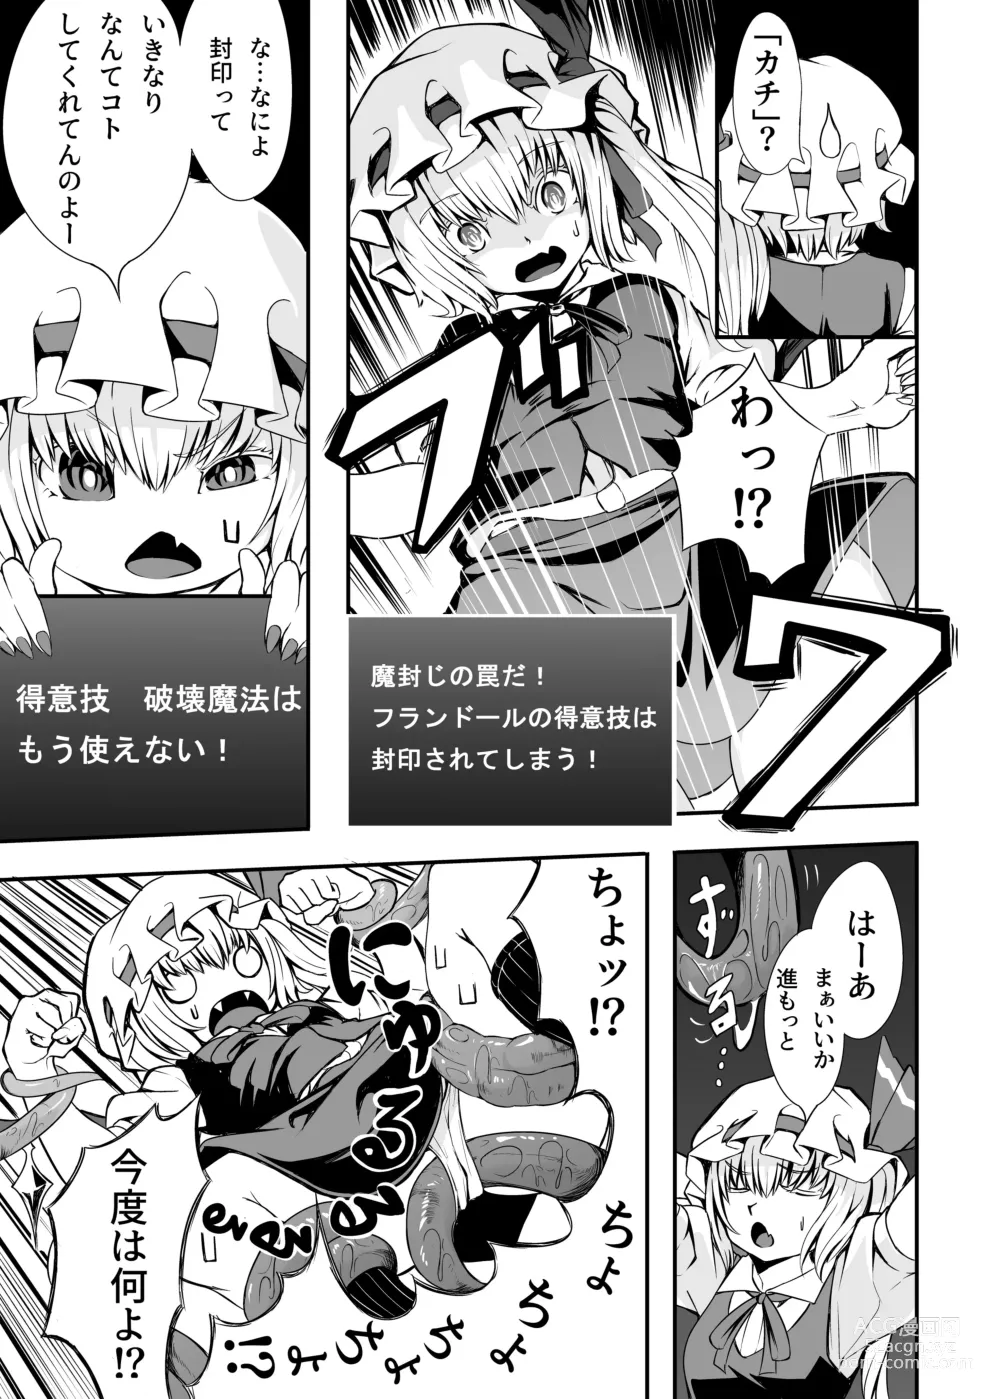 Page 6 of doujinshi Flan-chan and ETD